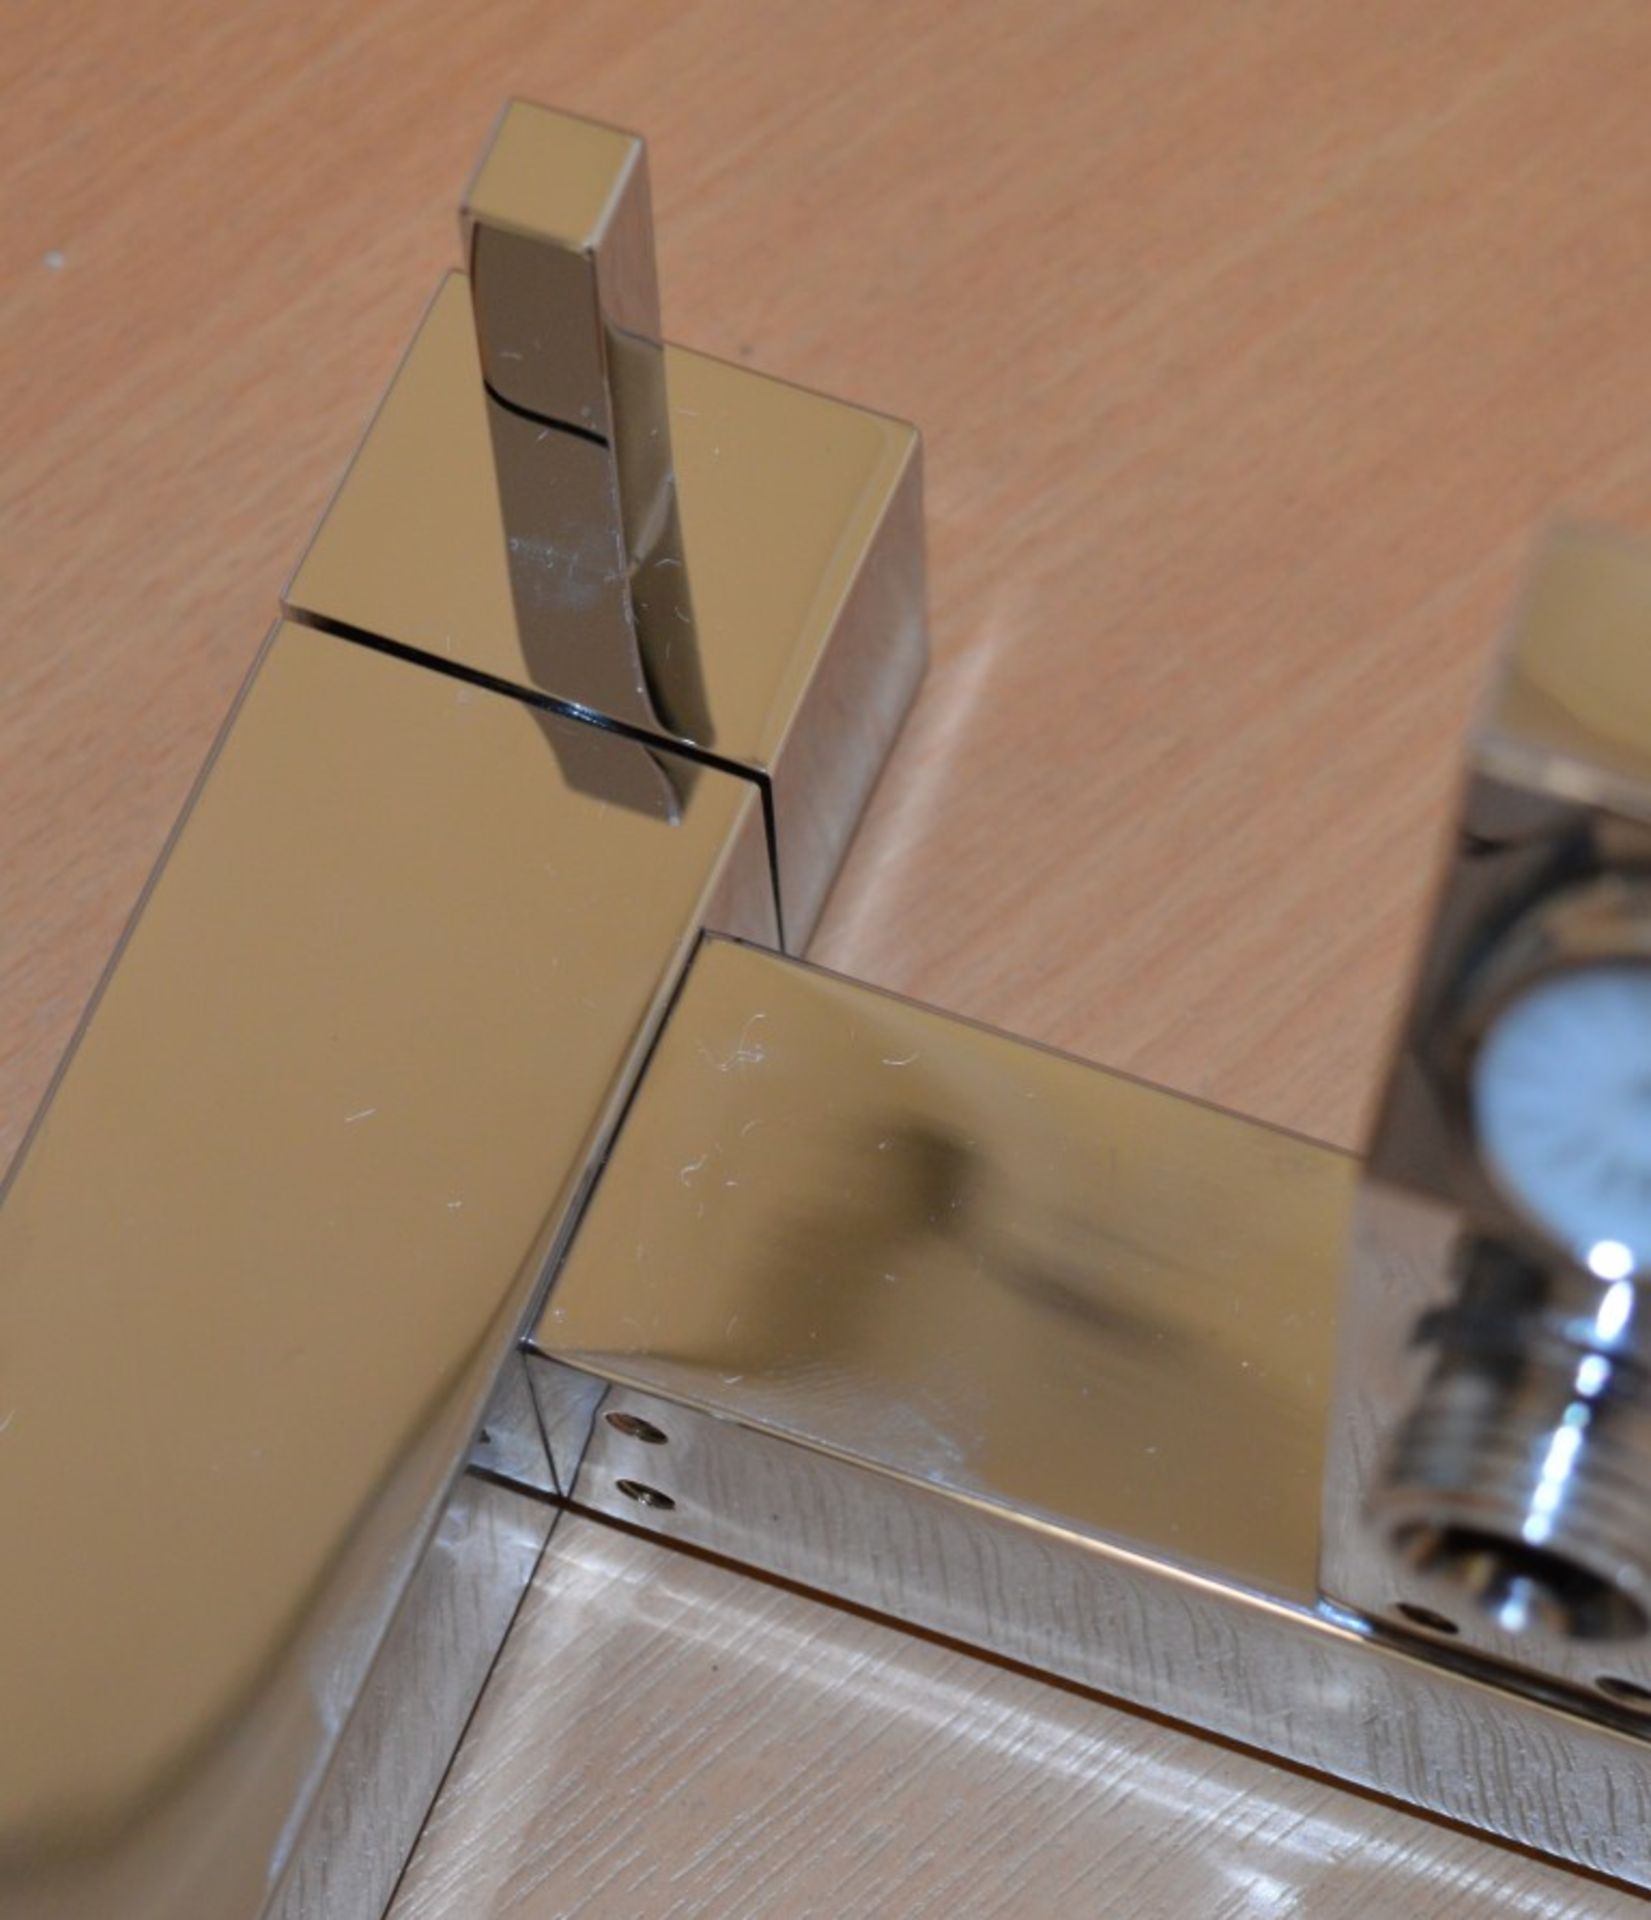 1 x Verona Deck Bath Shower Mixer Tap - Vogue Bathrooms - Modern Bath Mixer Tap in Bright Chrome - Image 13 of 16